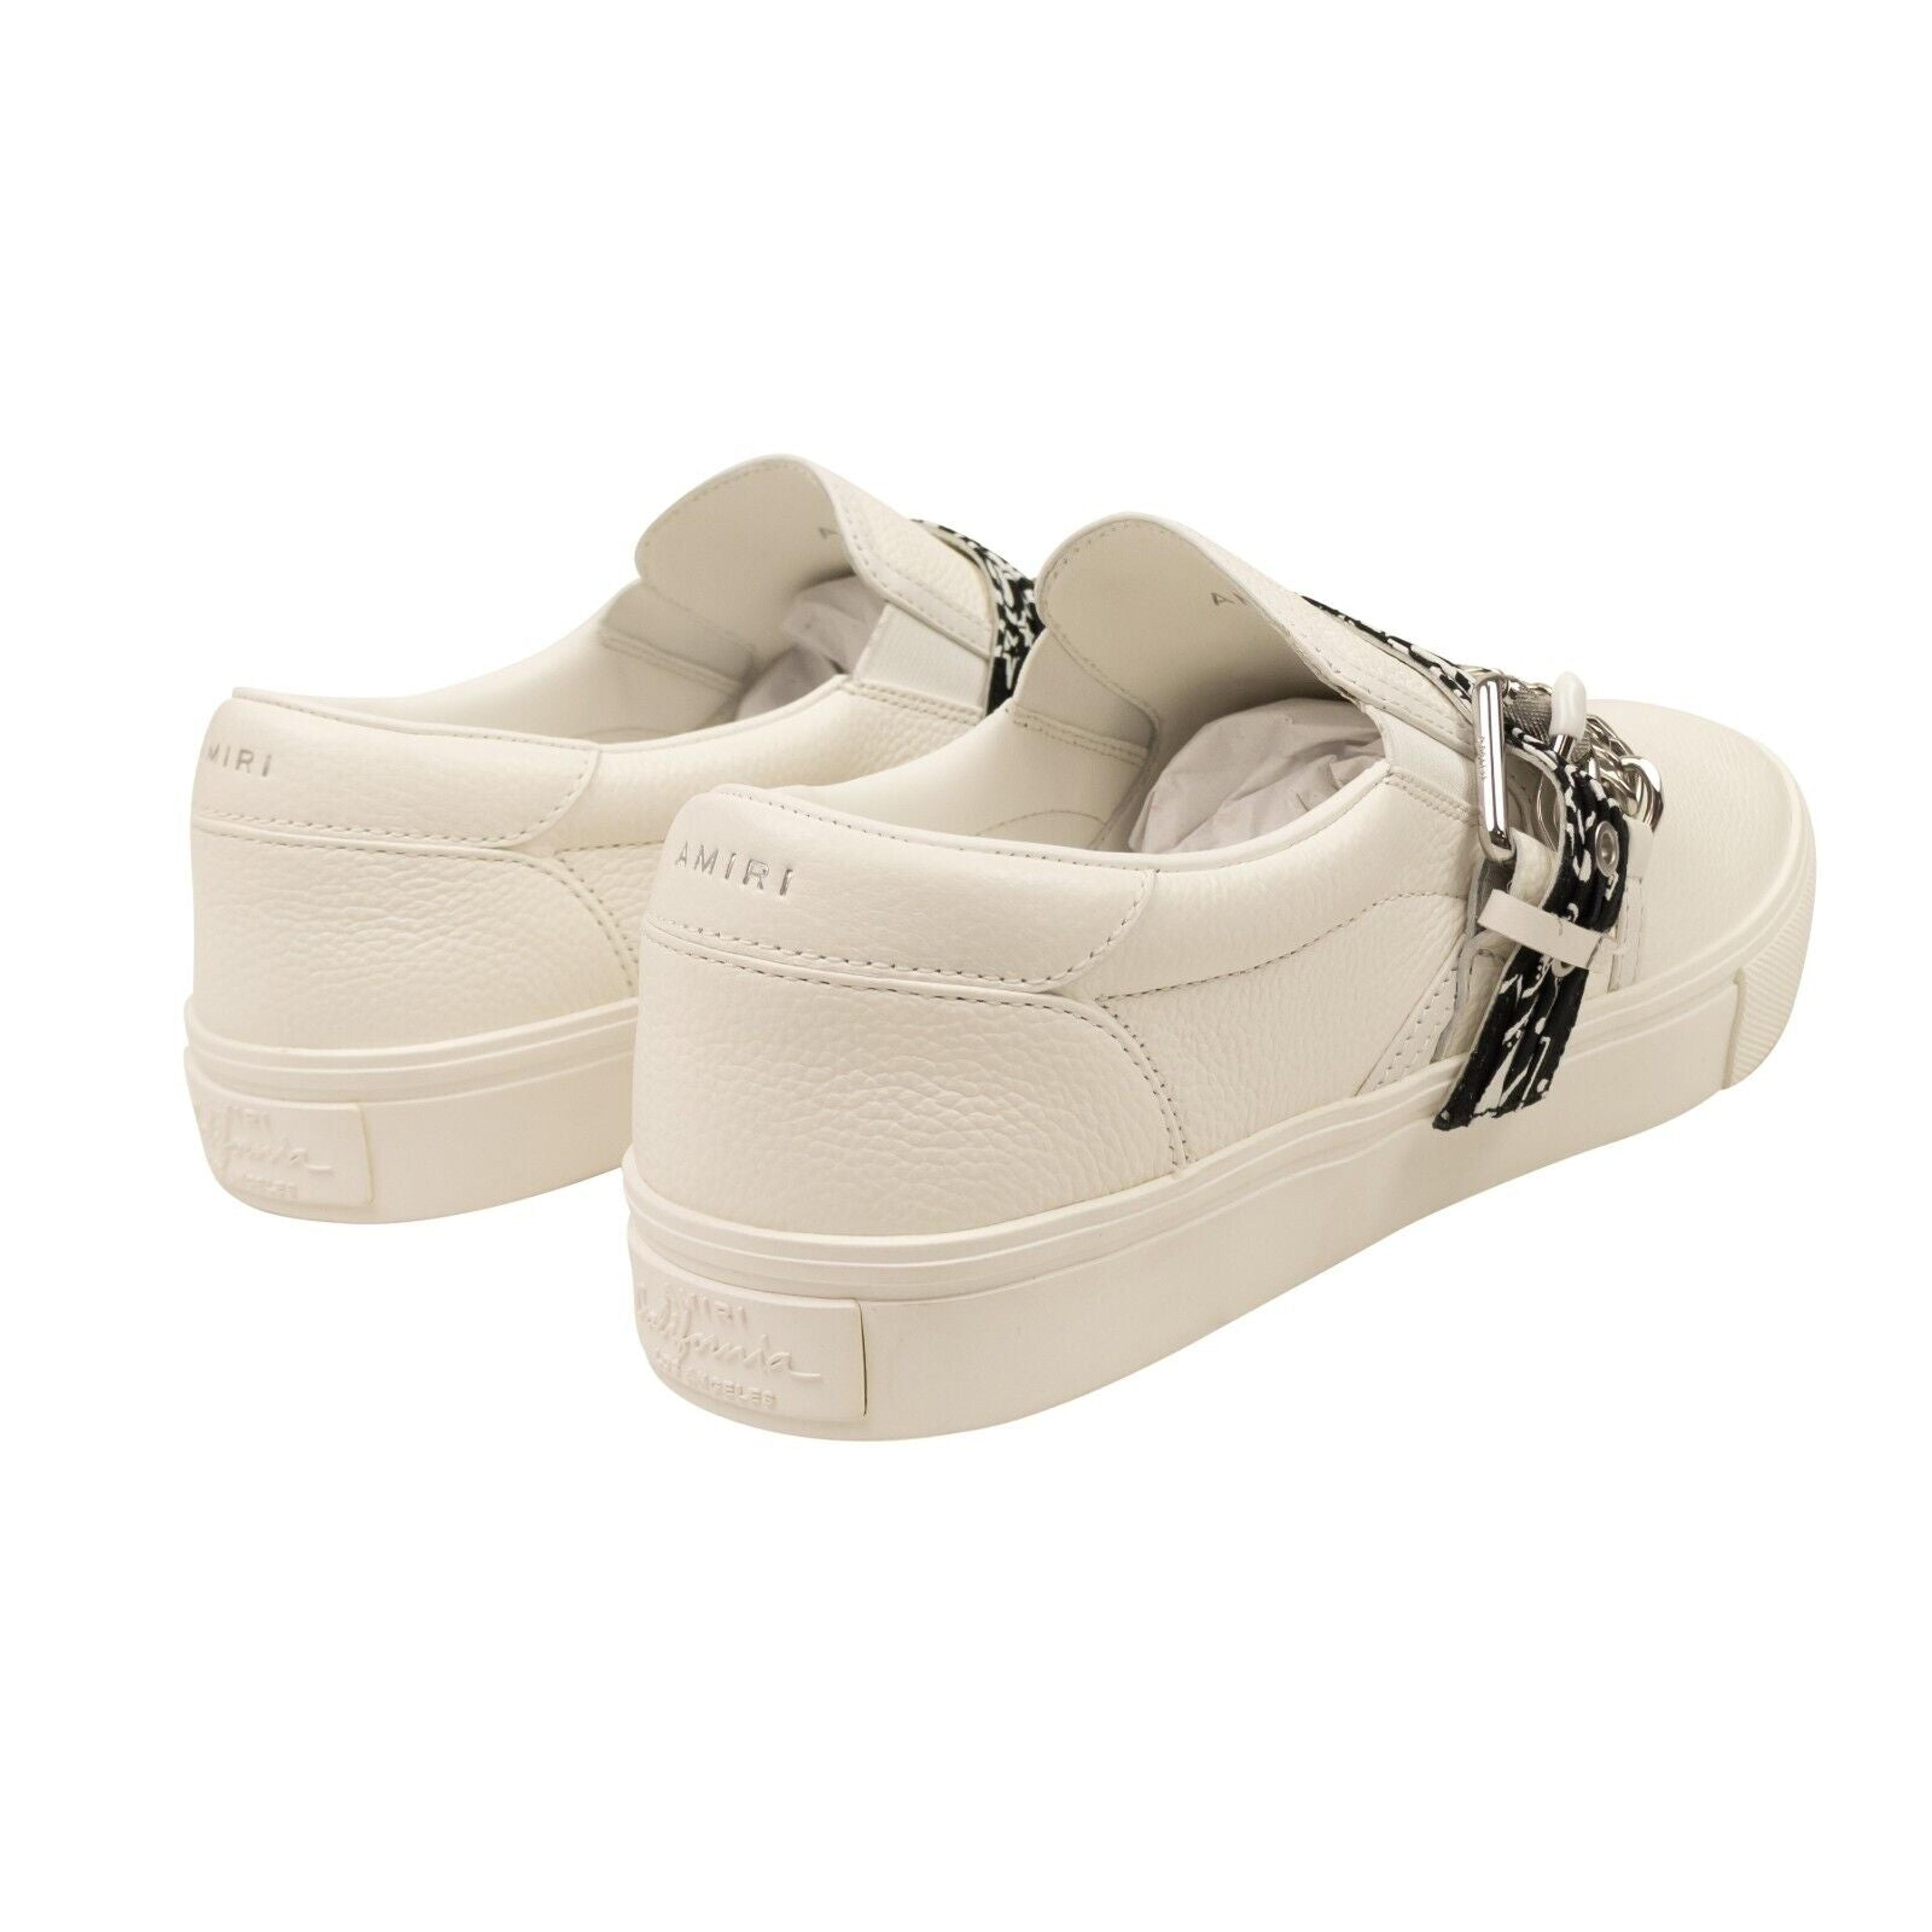 Alternate View 3 of Amiri Bandana Chain Slip On Sneakers - White